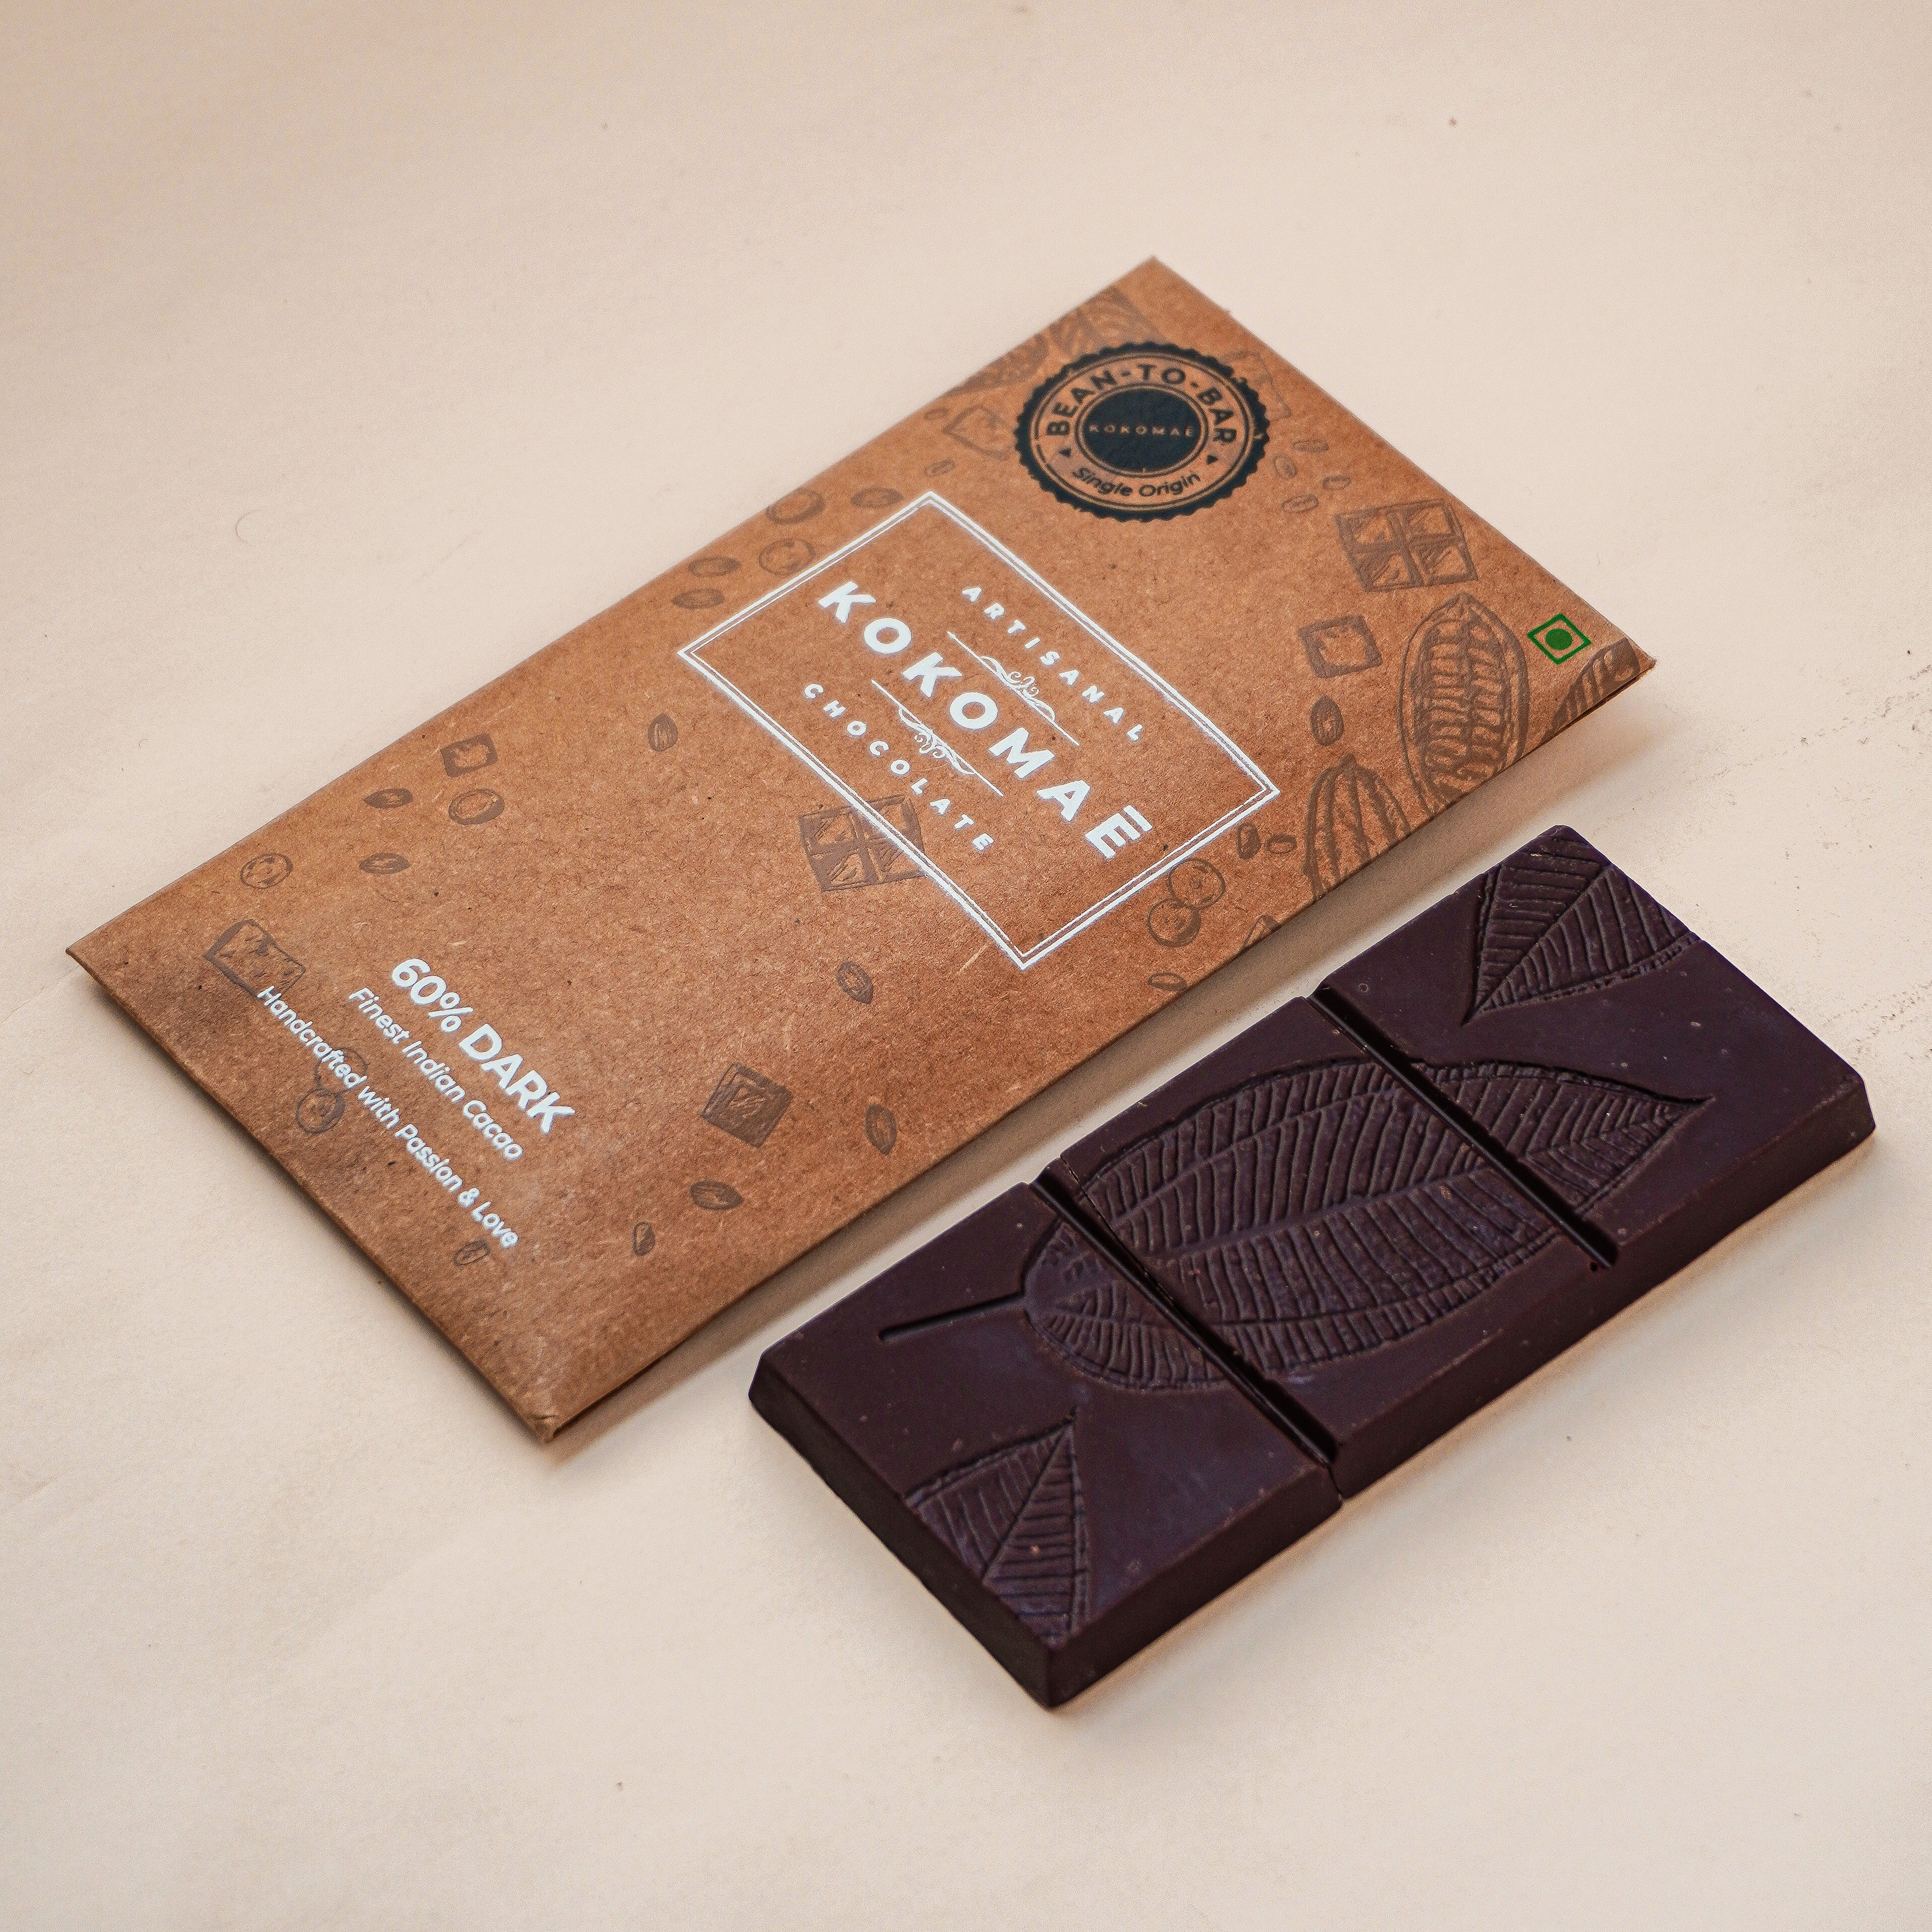 Kokomaē Bean to Bar 60% Organic Dark Chocolate made of Finest Cocoa Beans from Idukki Region